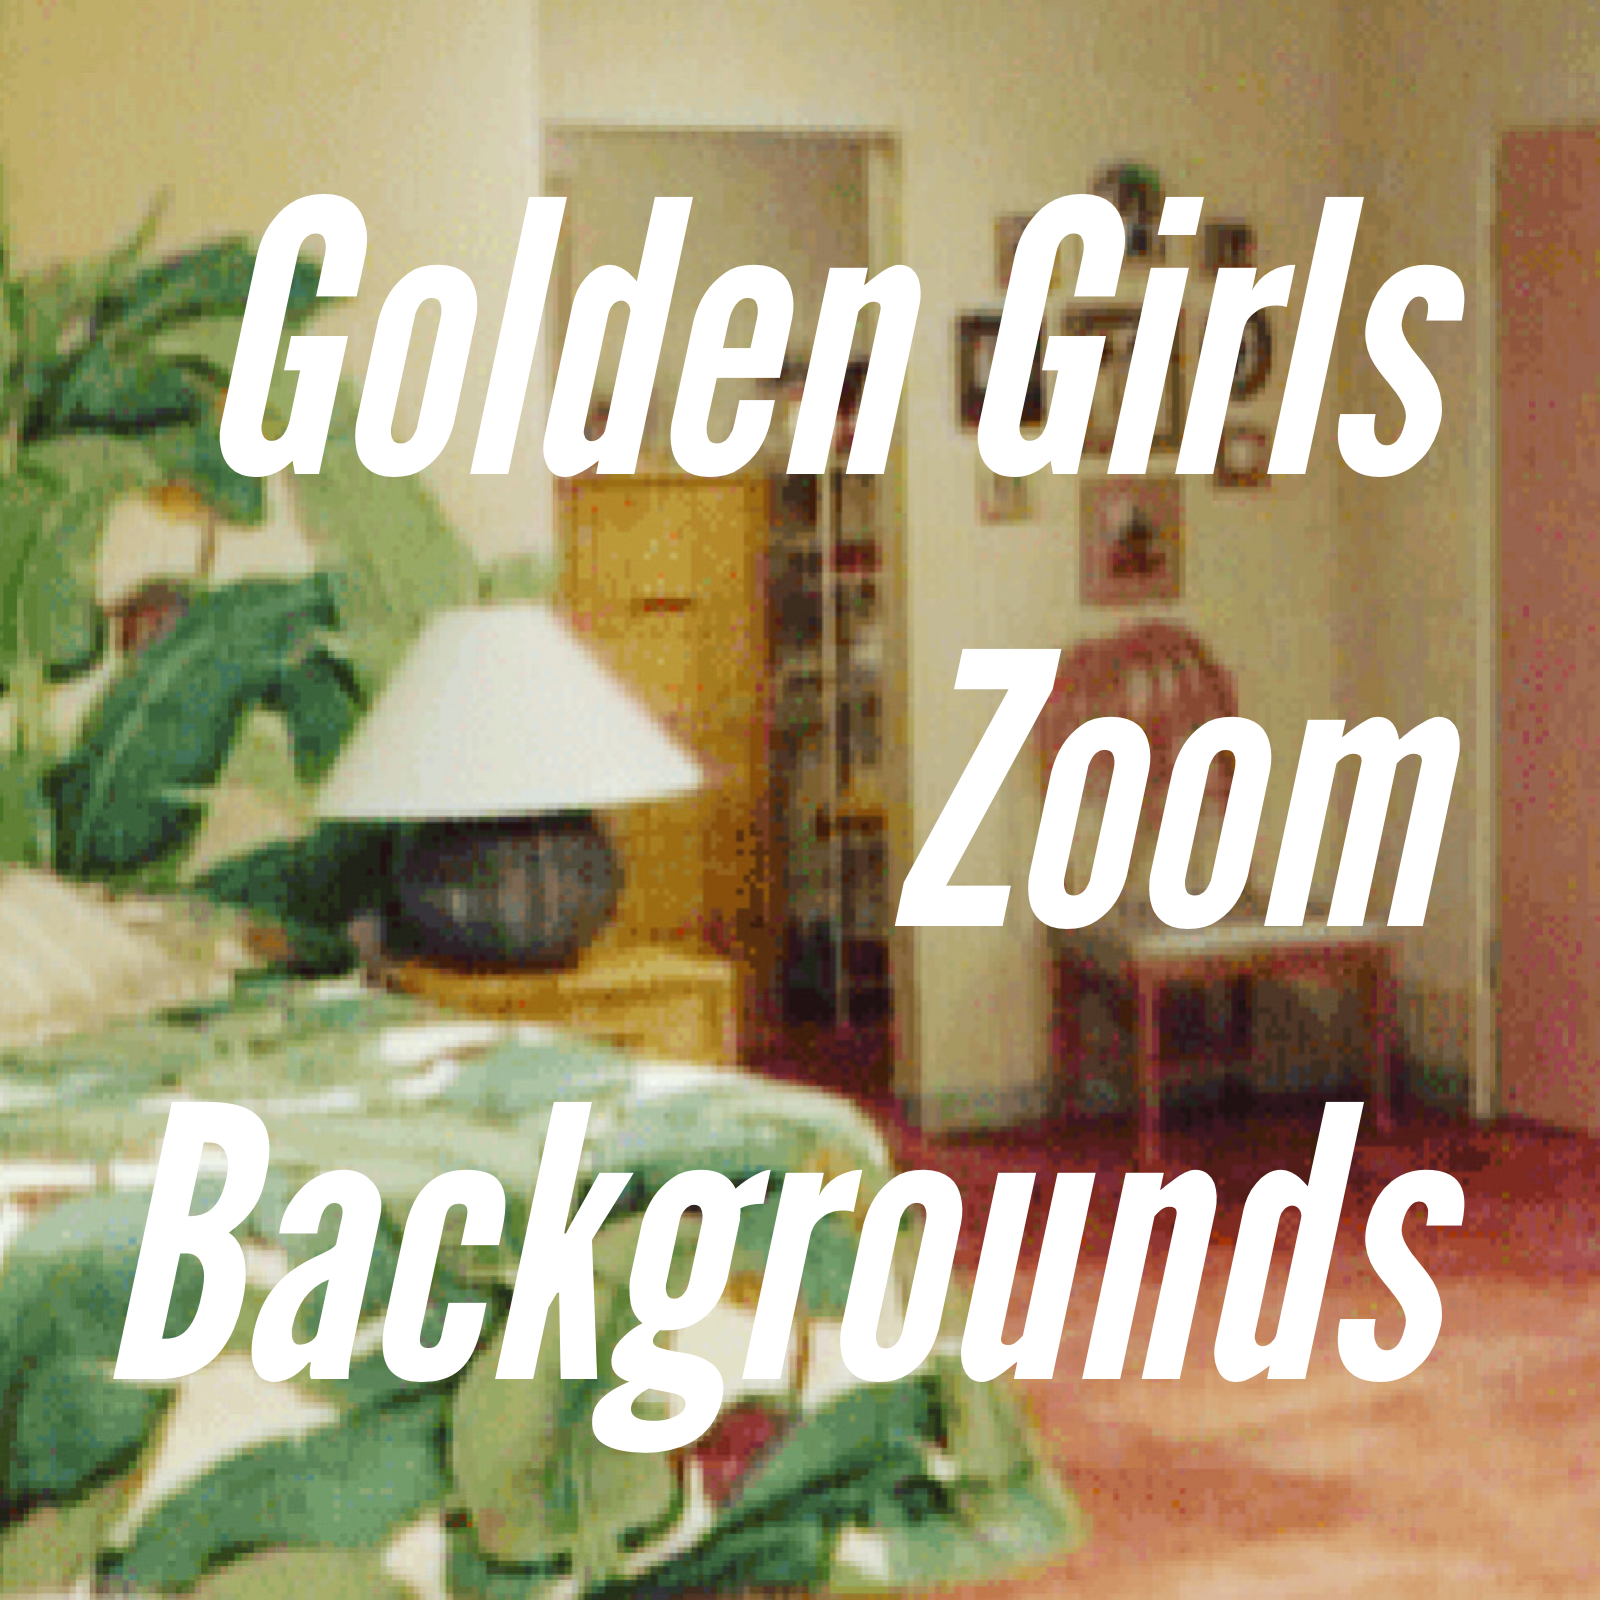 The Golden Girls Wallpapers